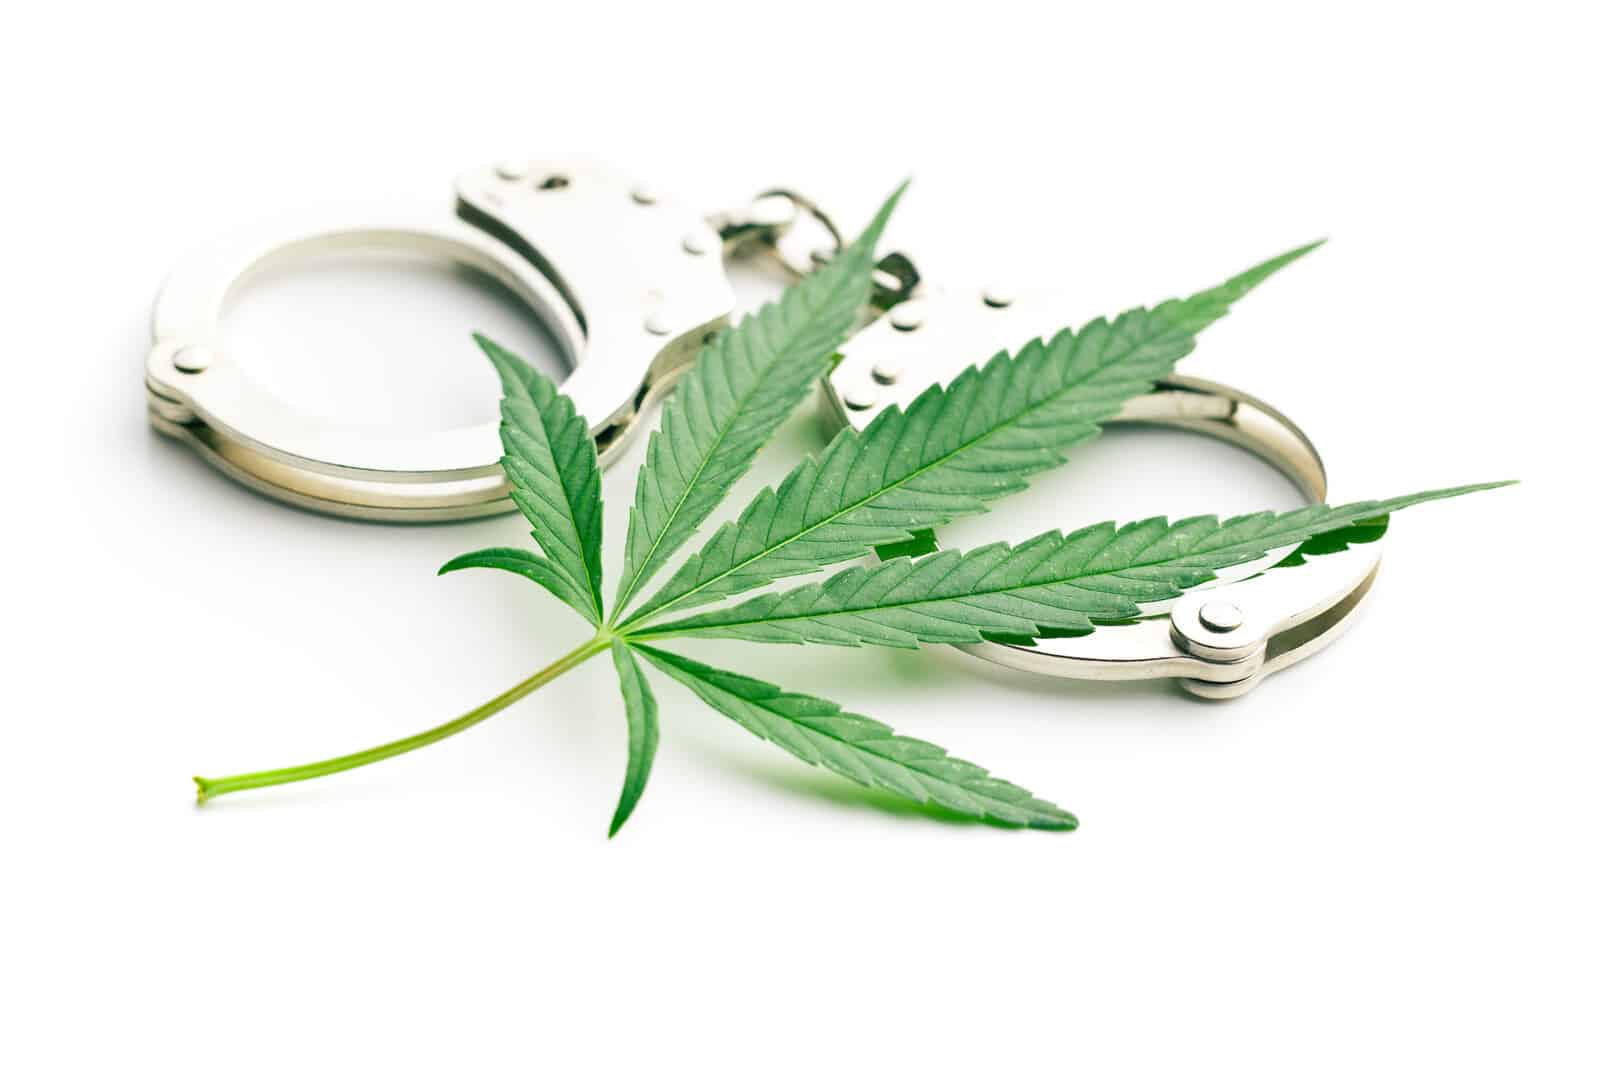 BREAKING: Biden Pardons Federal Cannabis Possession Conditions